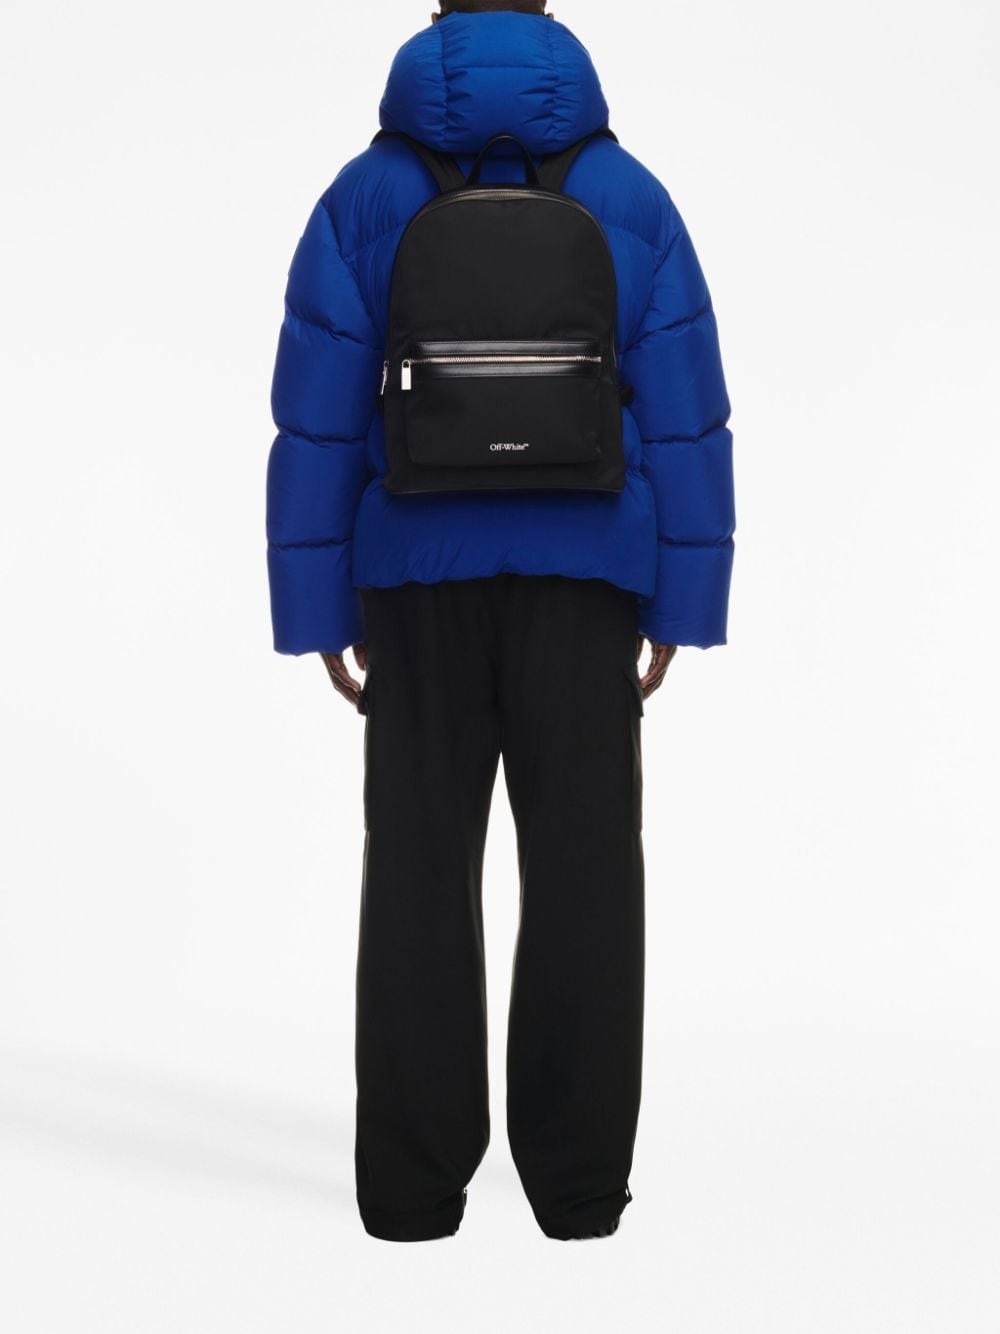 Off-White c/o Virgil Abloh 'courrier' Backpack in Black for Men